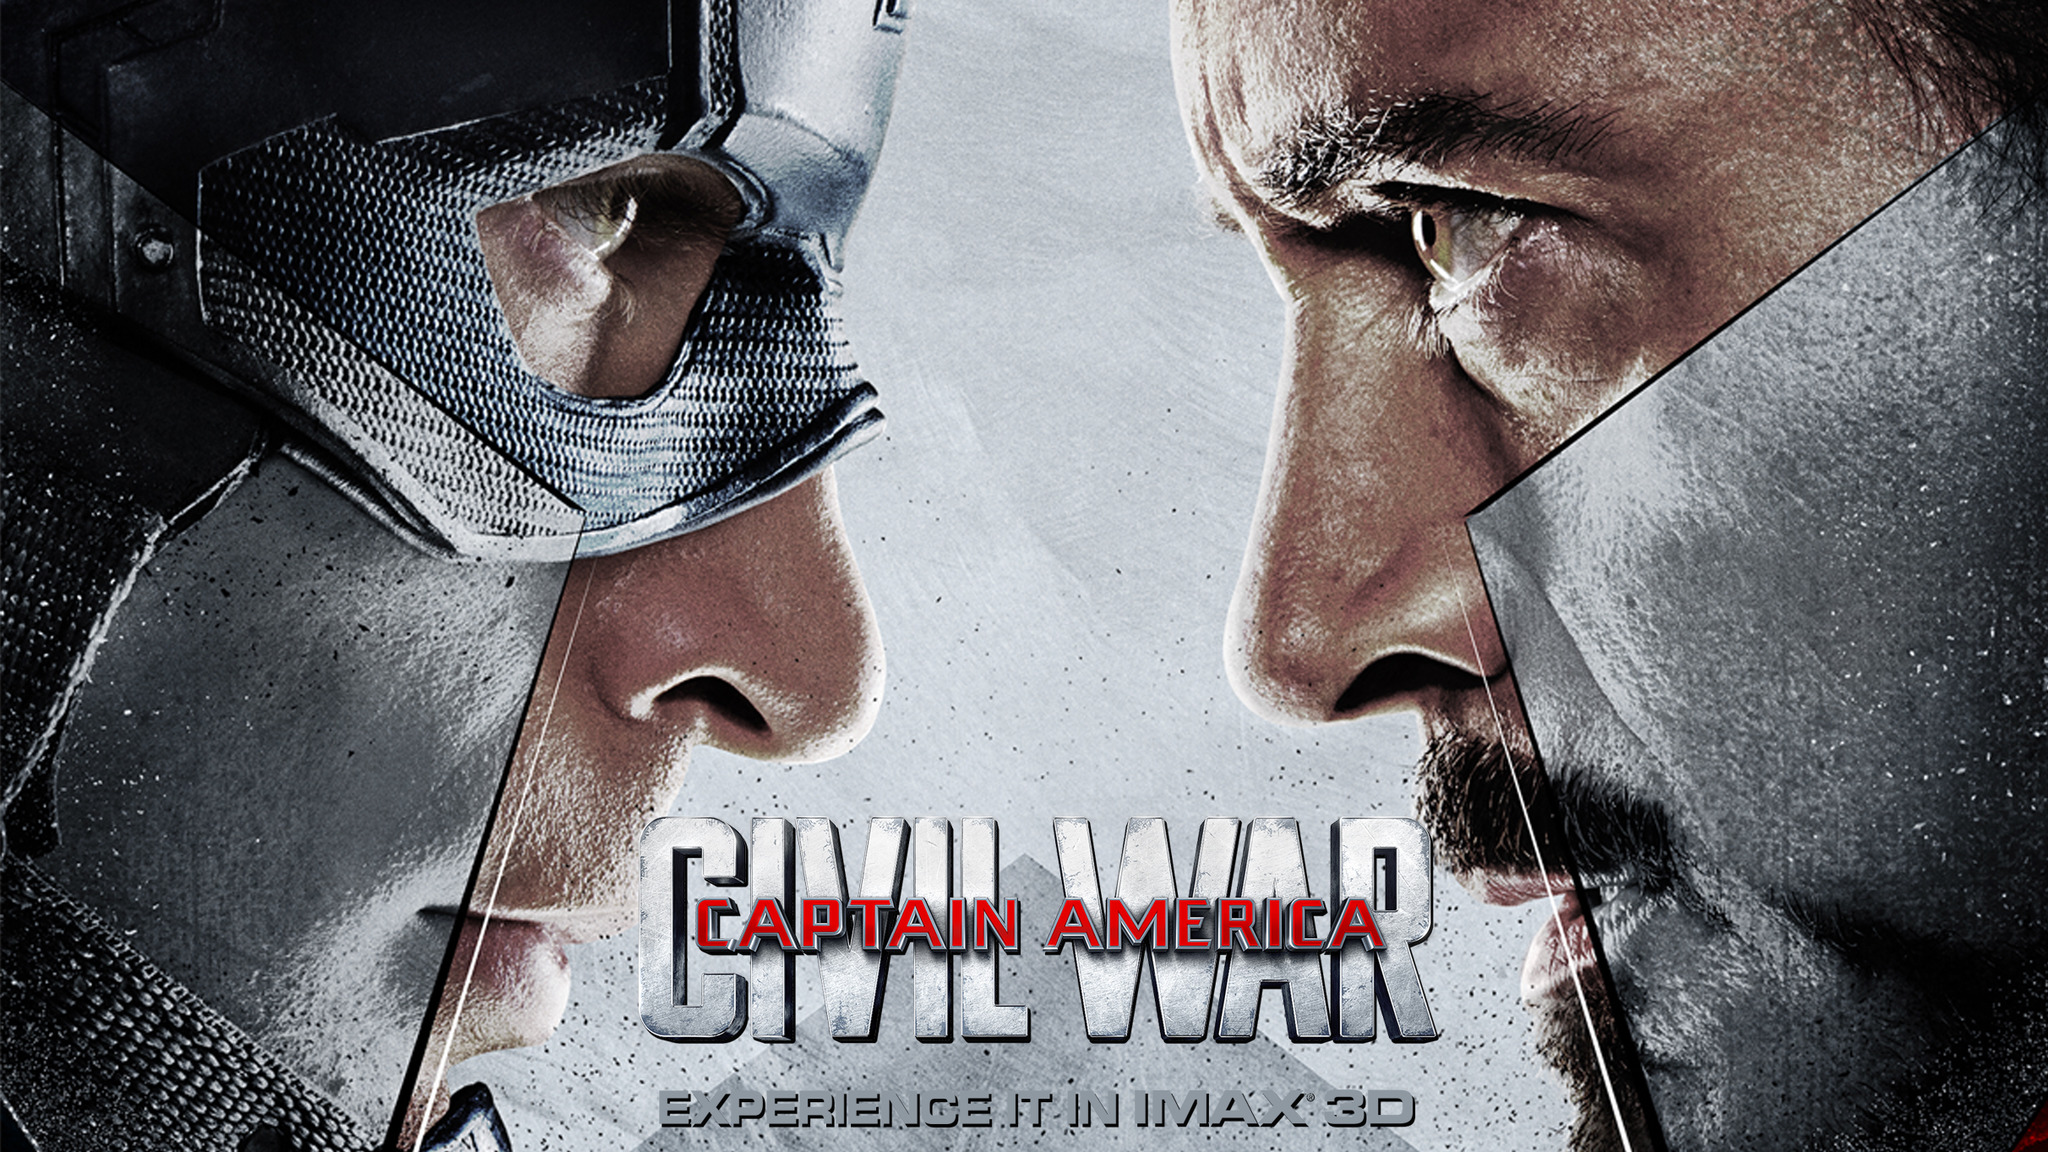 Captain America Civil War Tickets Event Dates & Schedule